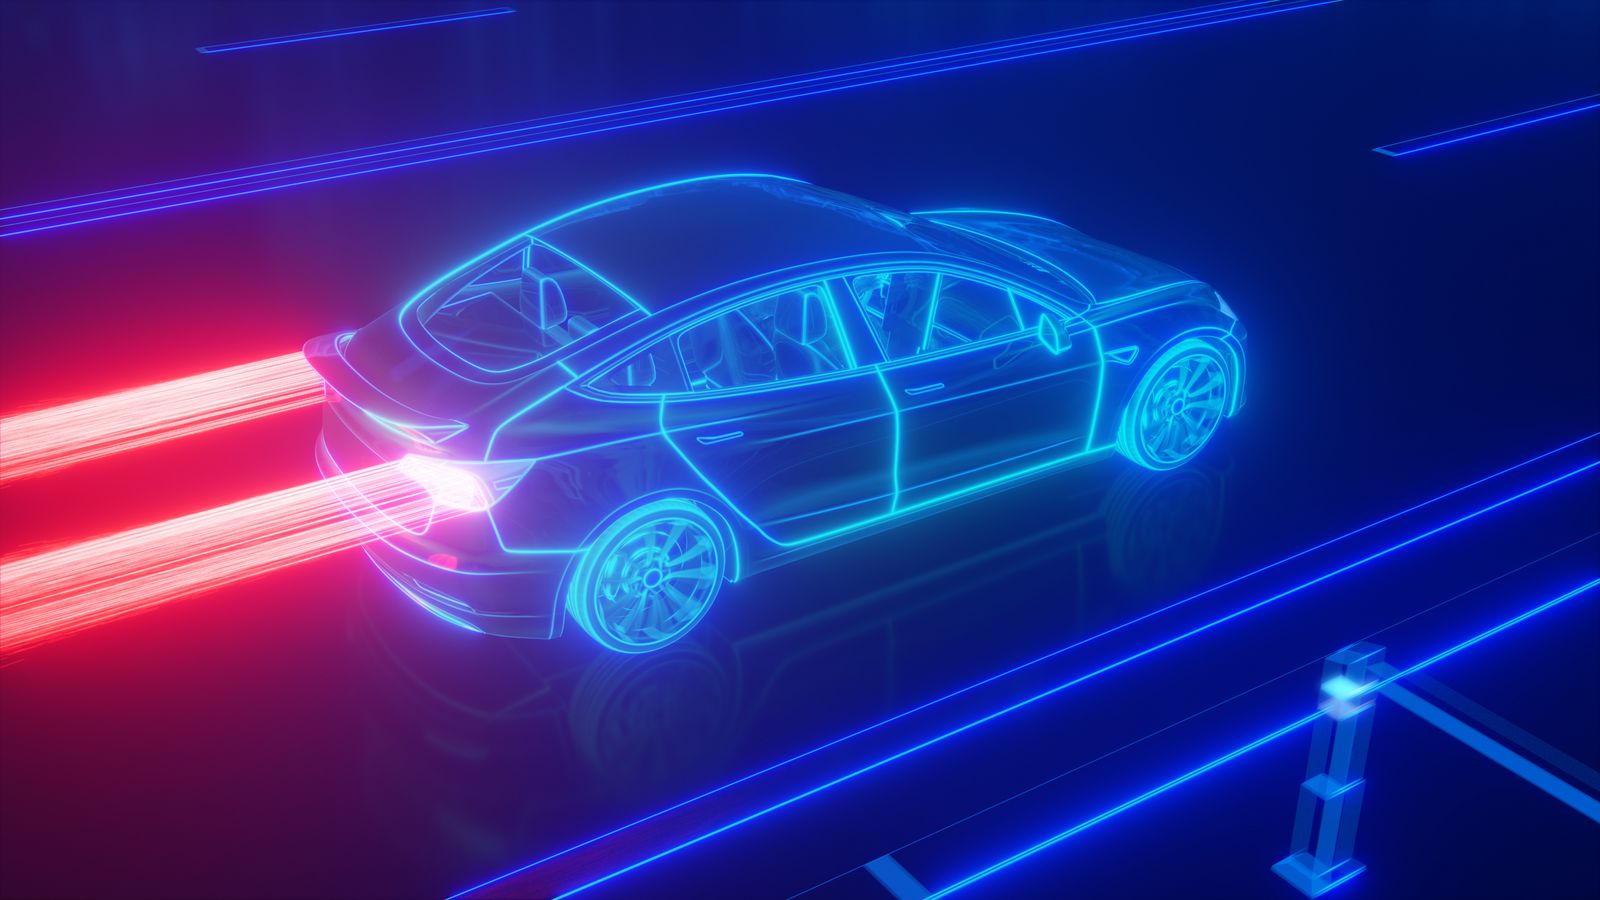 Futuristic visualization of an electric vehicle